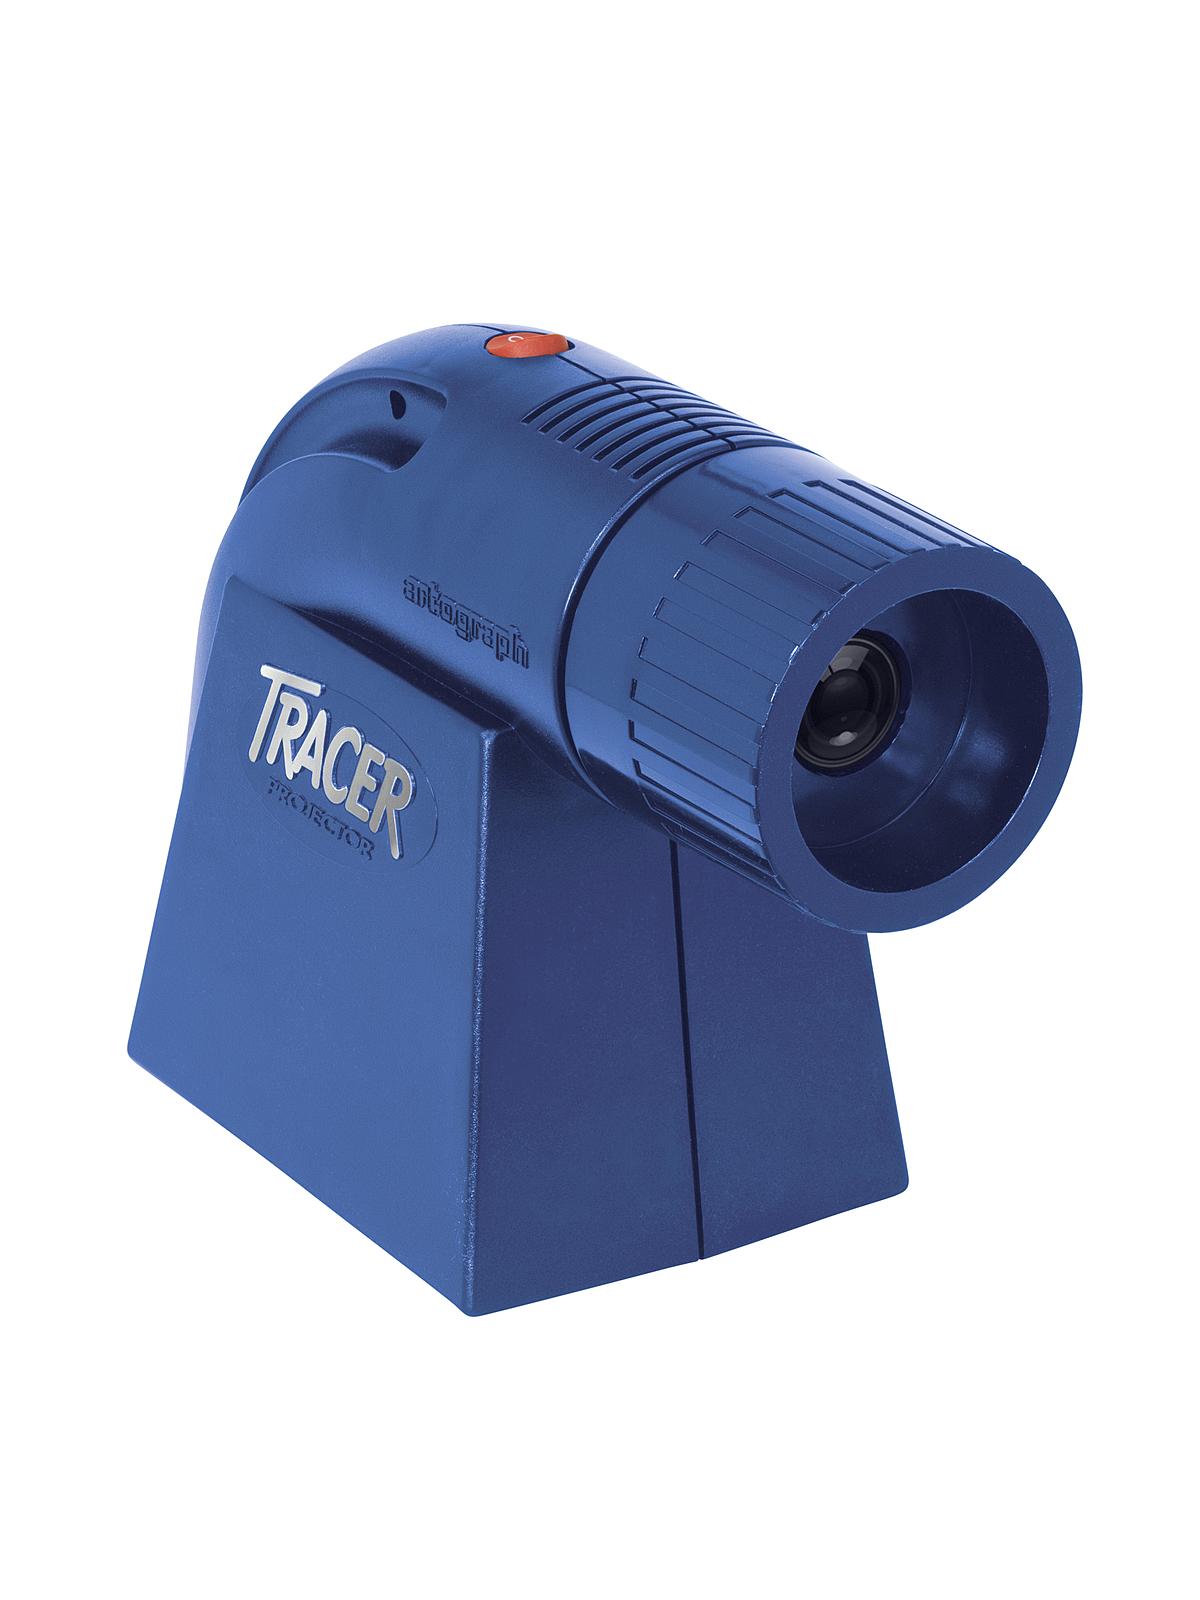 Artograph - Tracer Projector